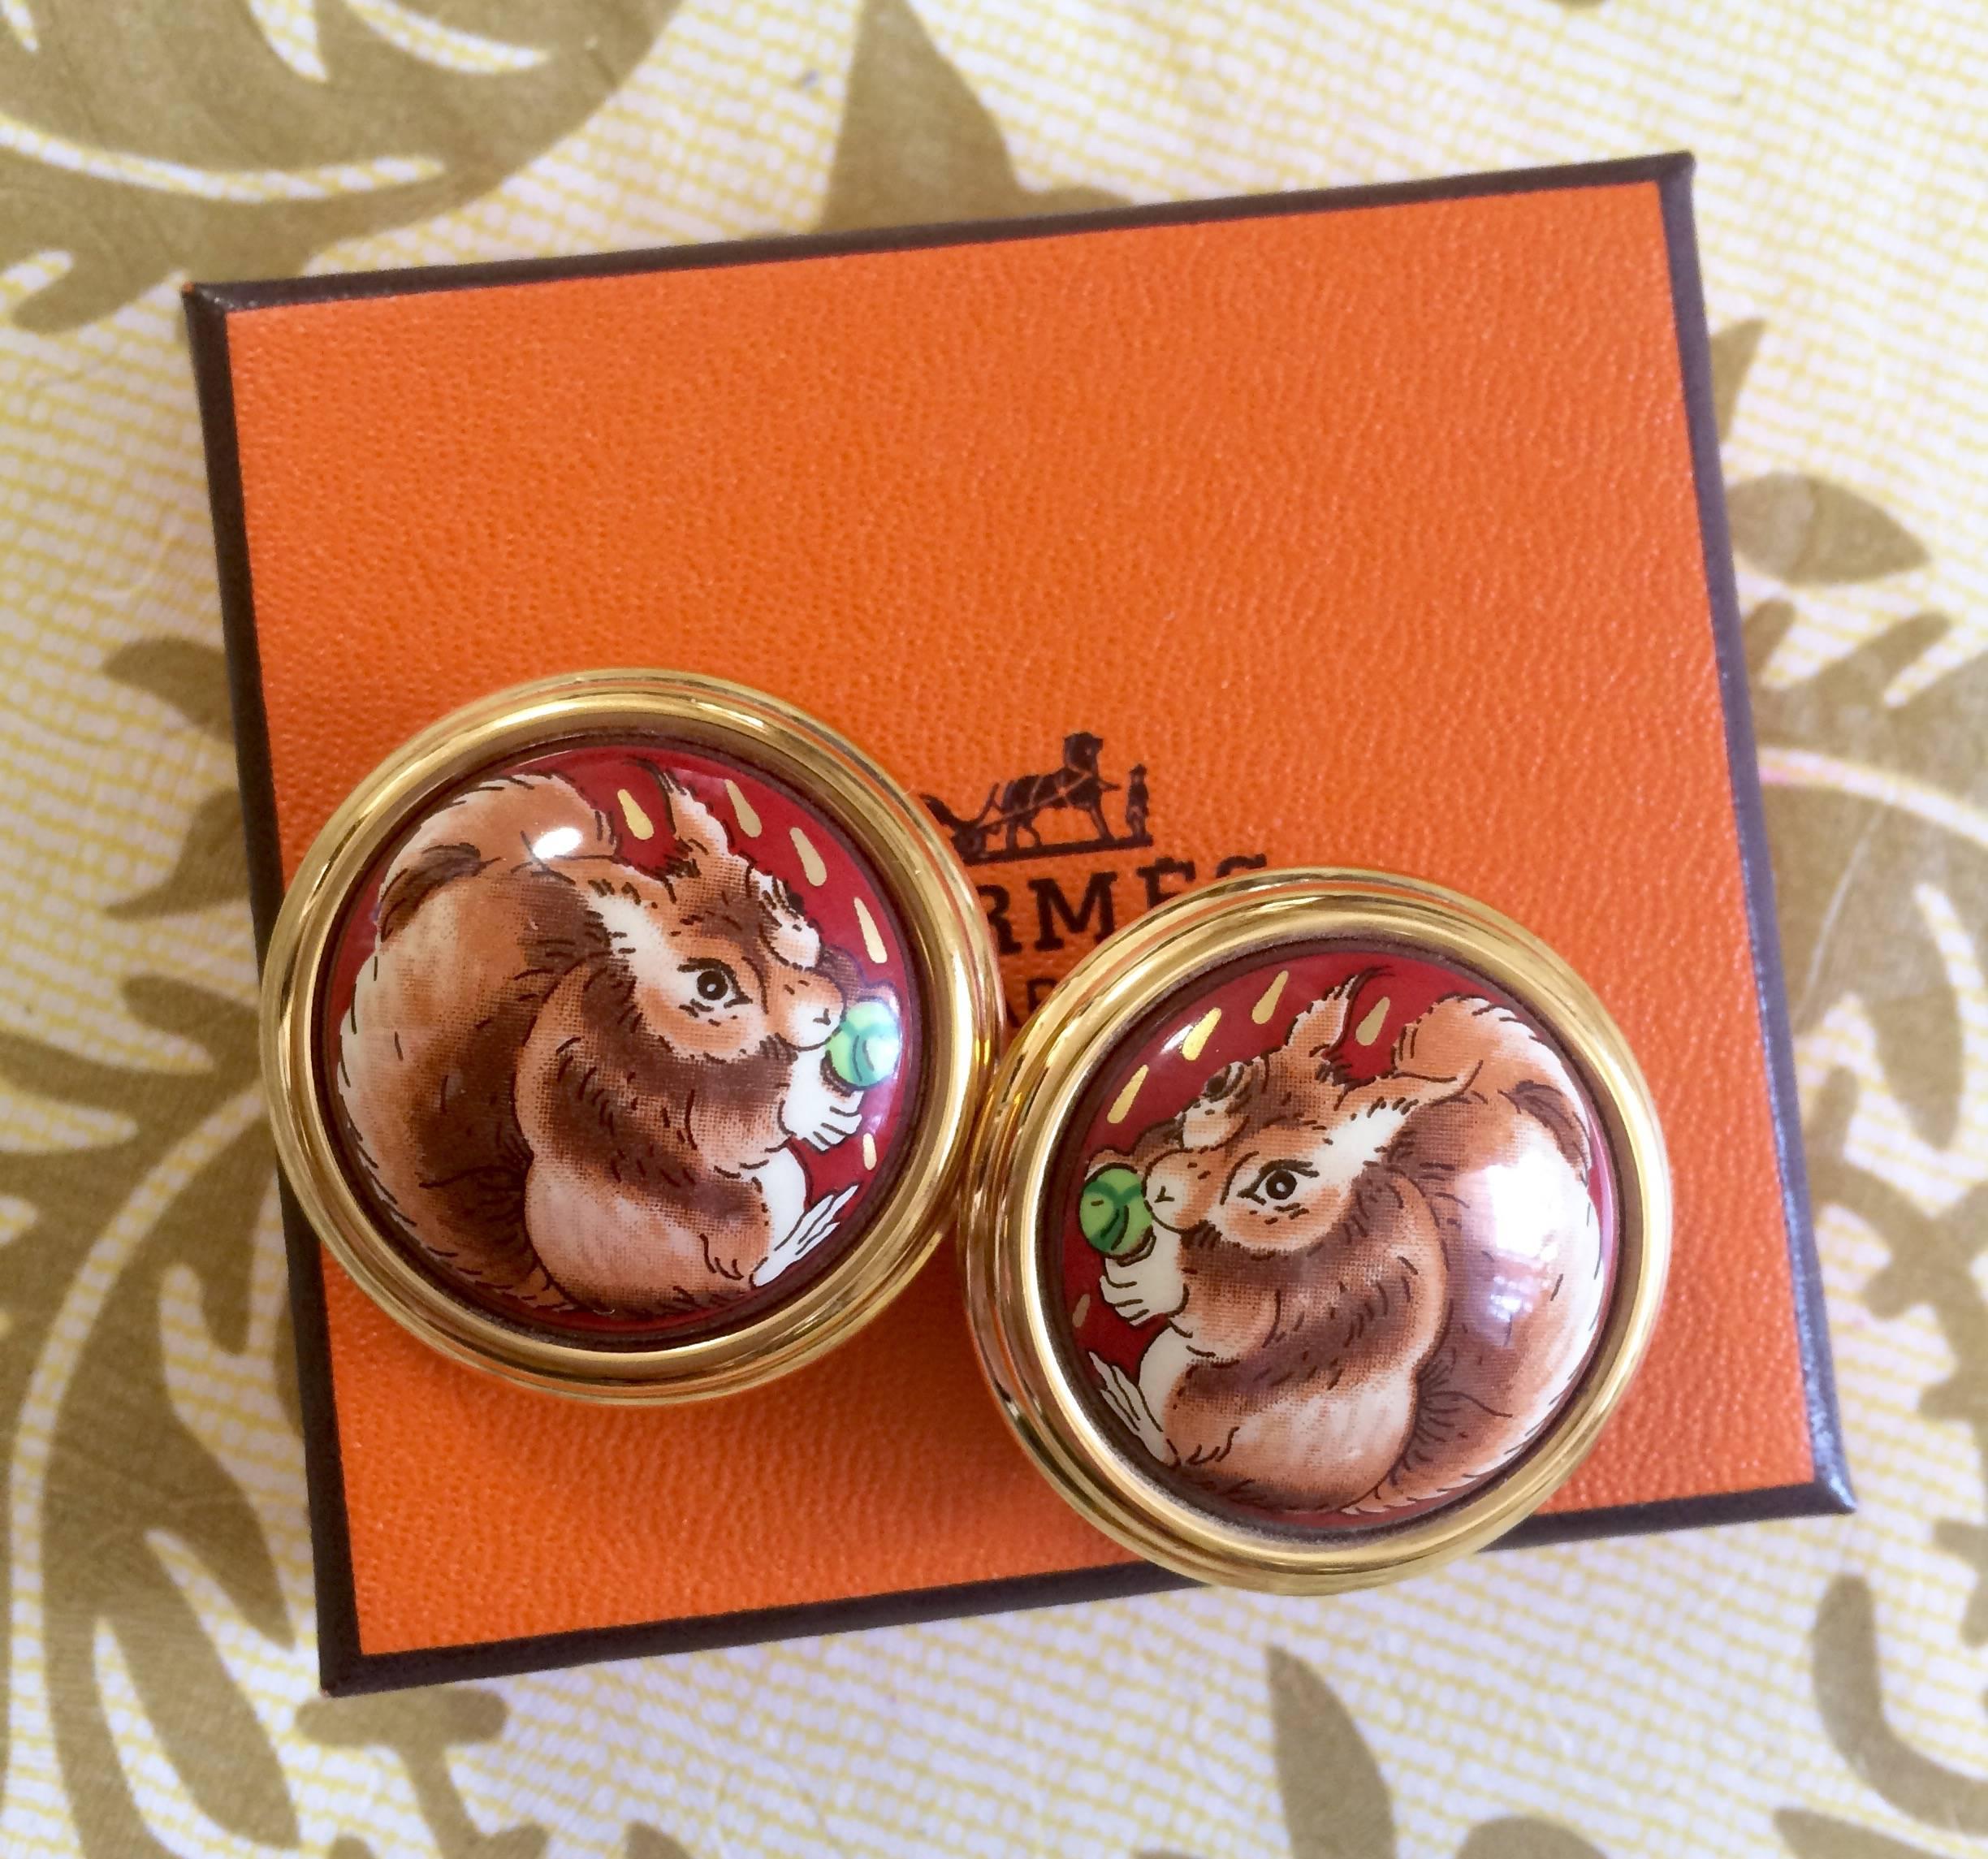 MINT. Vintage Hermes round cloisonne enamel golden earrings with squirrel design For Sale 3